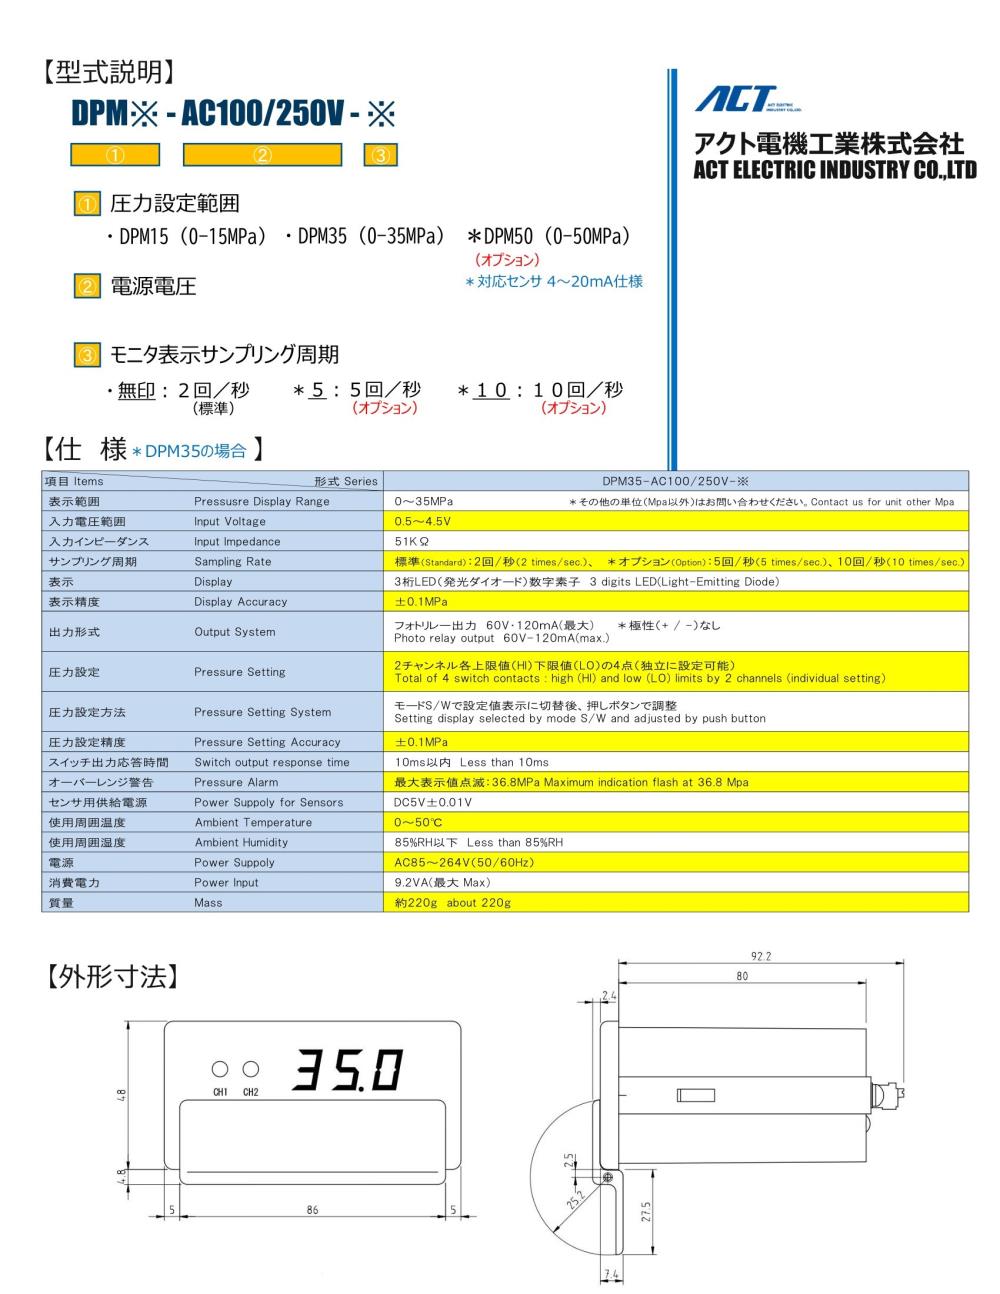 ACT Digital Pressure Monitor DPM15-AC100/250V Series